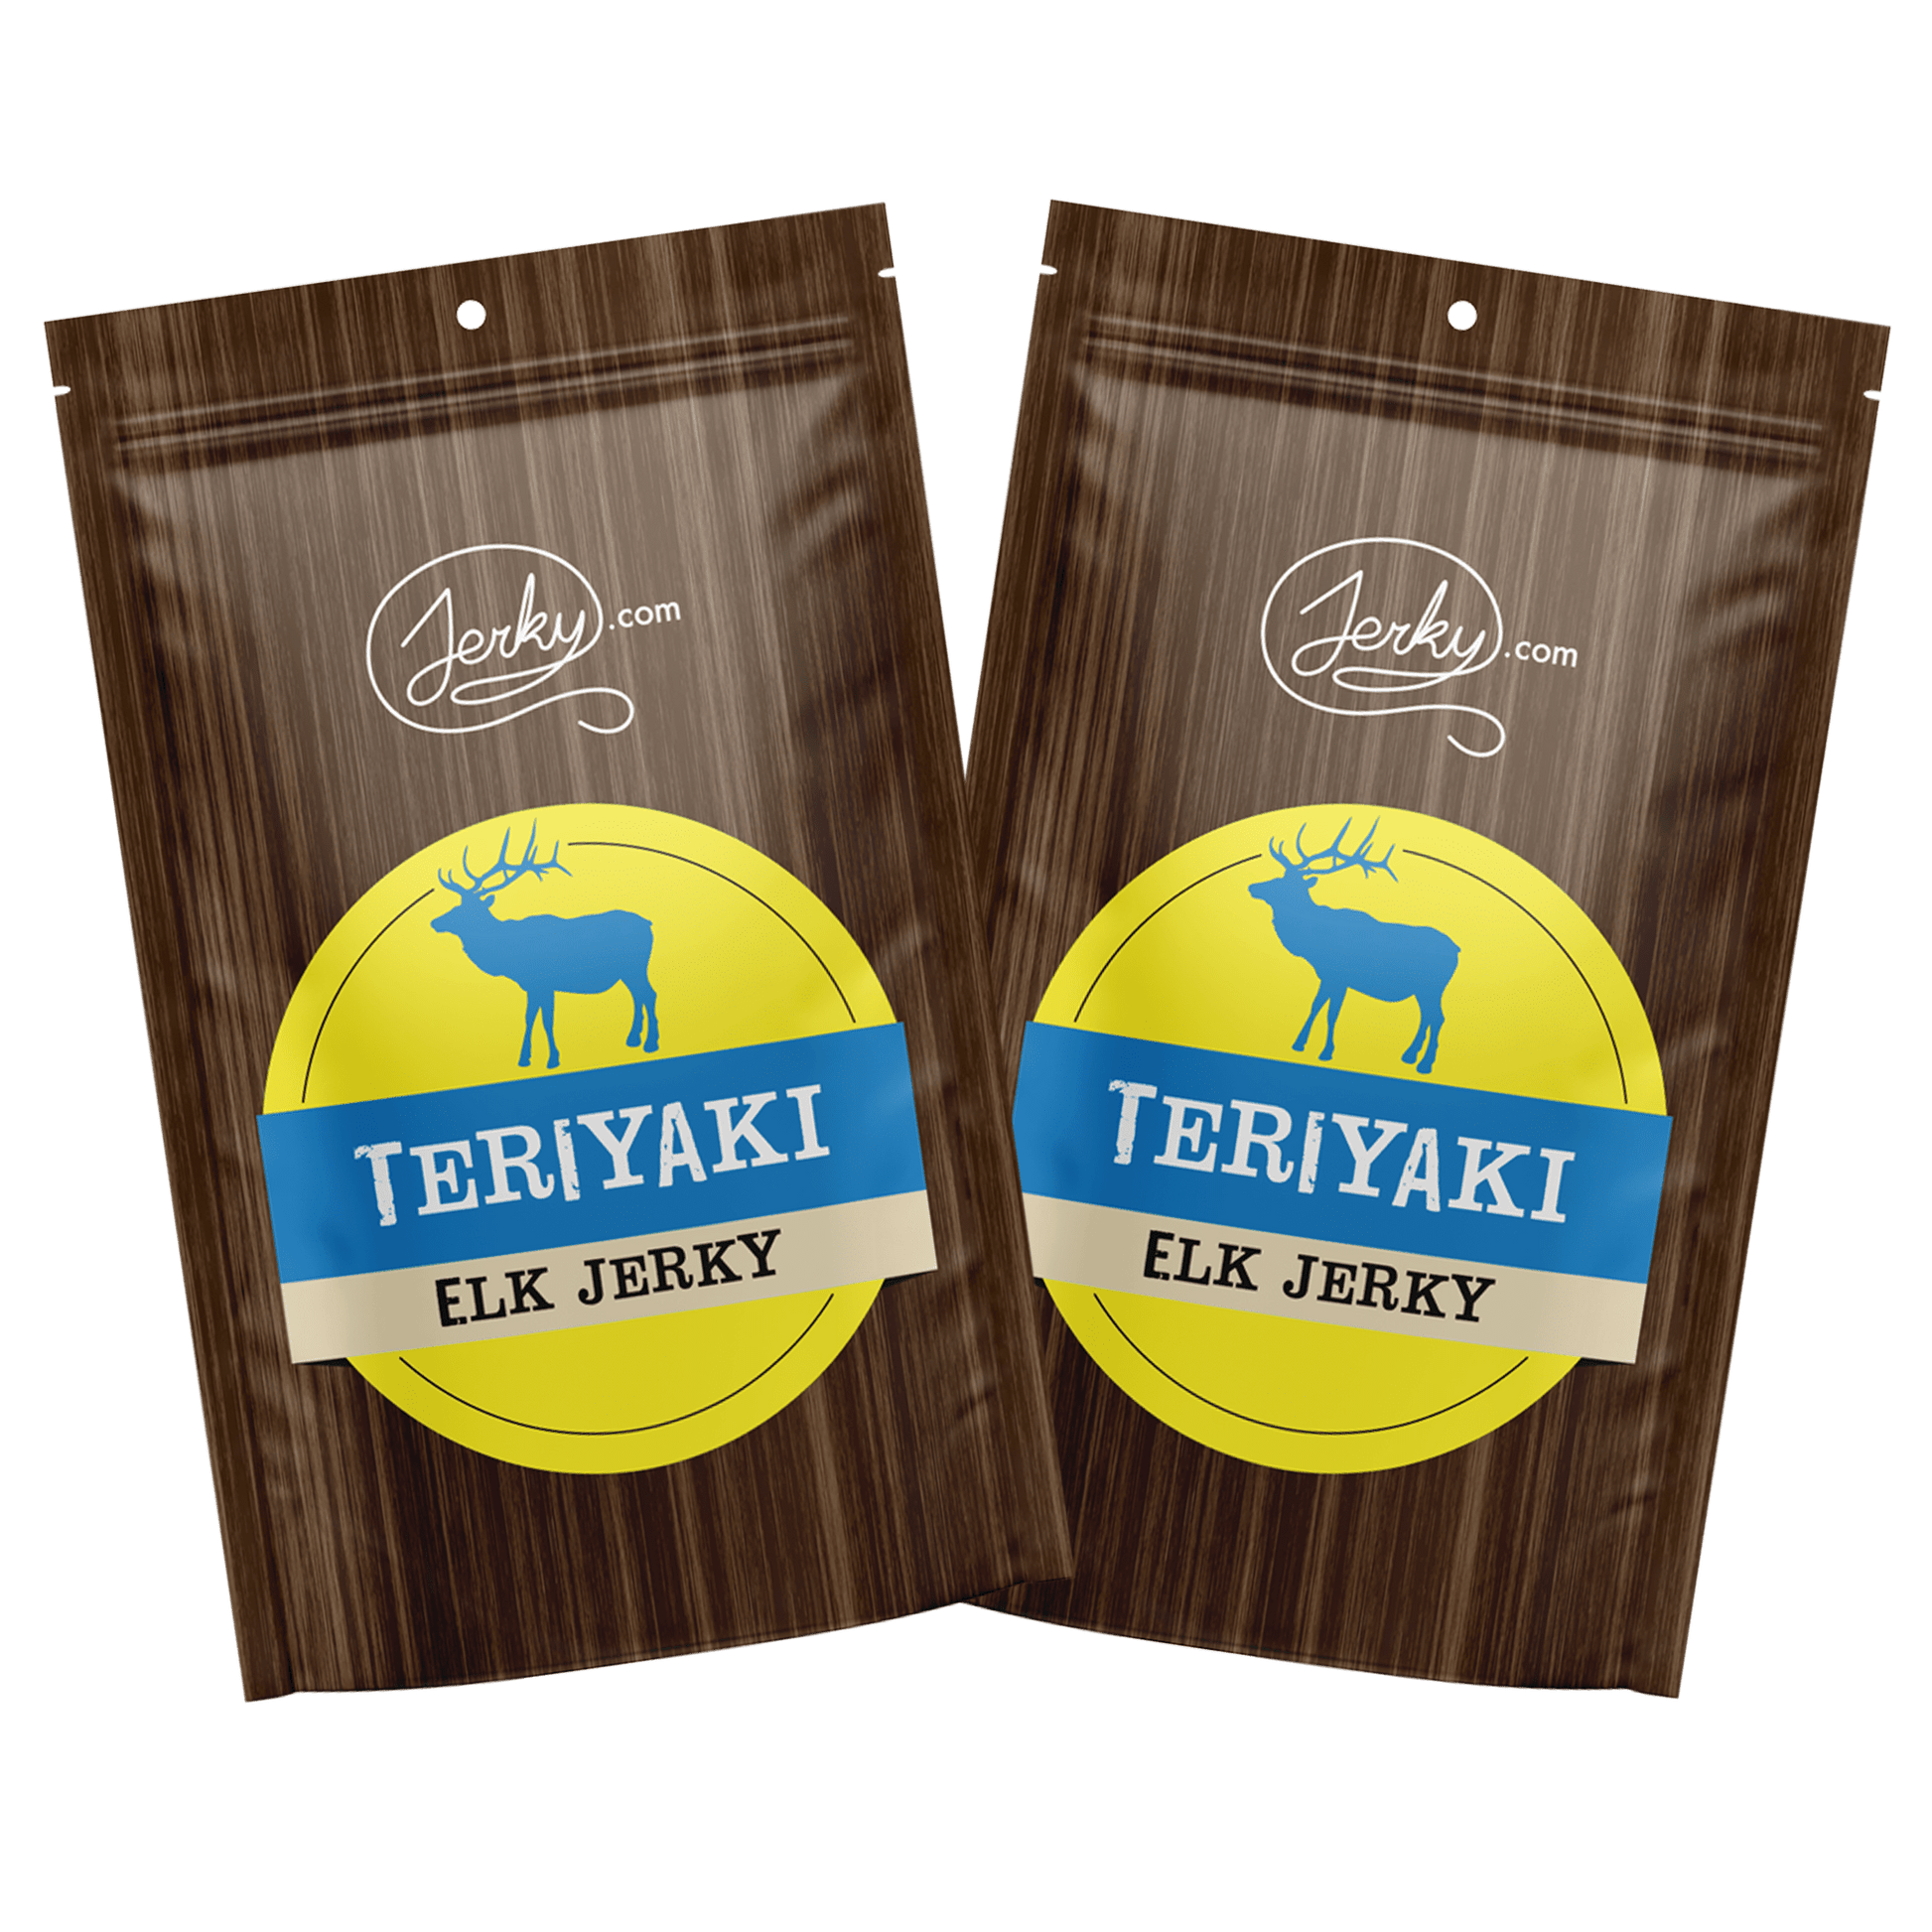 All-Natural Elk Jerky - Teriyaki by Jerky.com